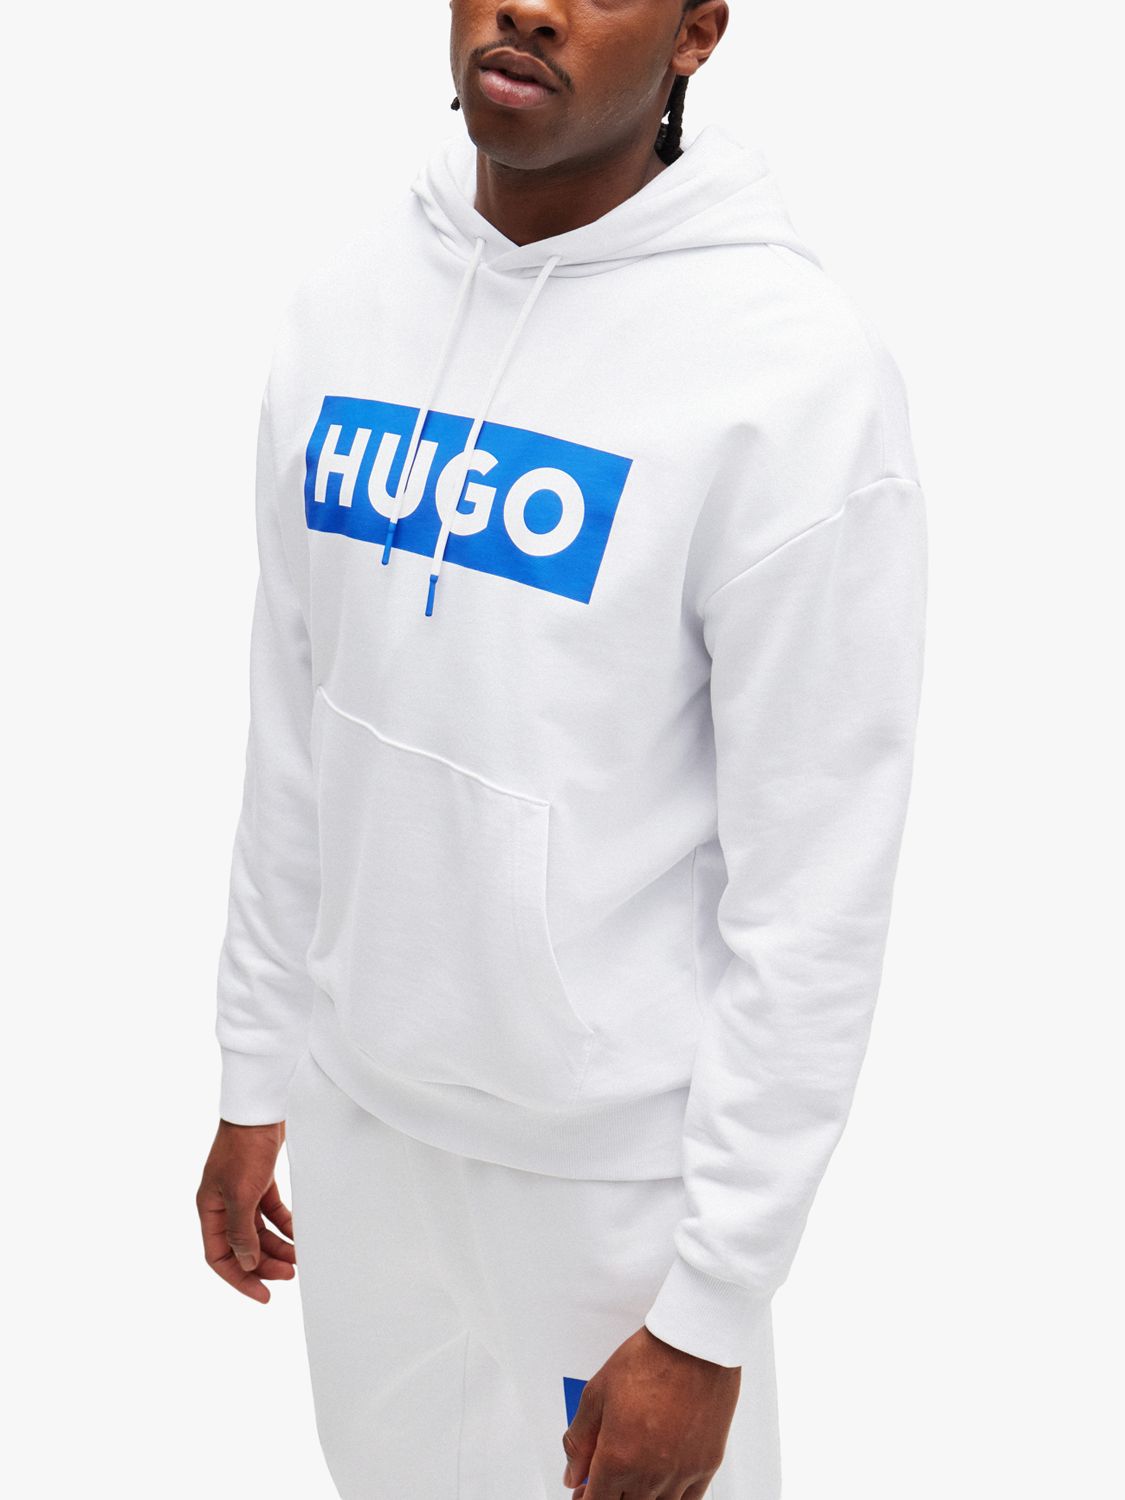 HUGO Nalves 100 Hoodie, White/Blue, XL